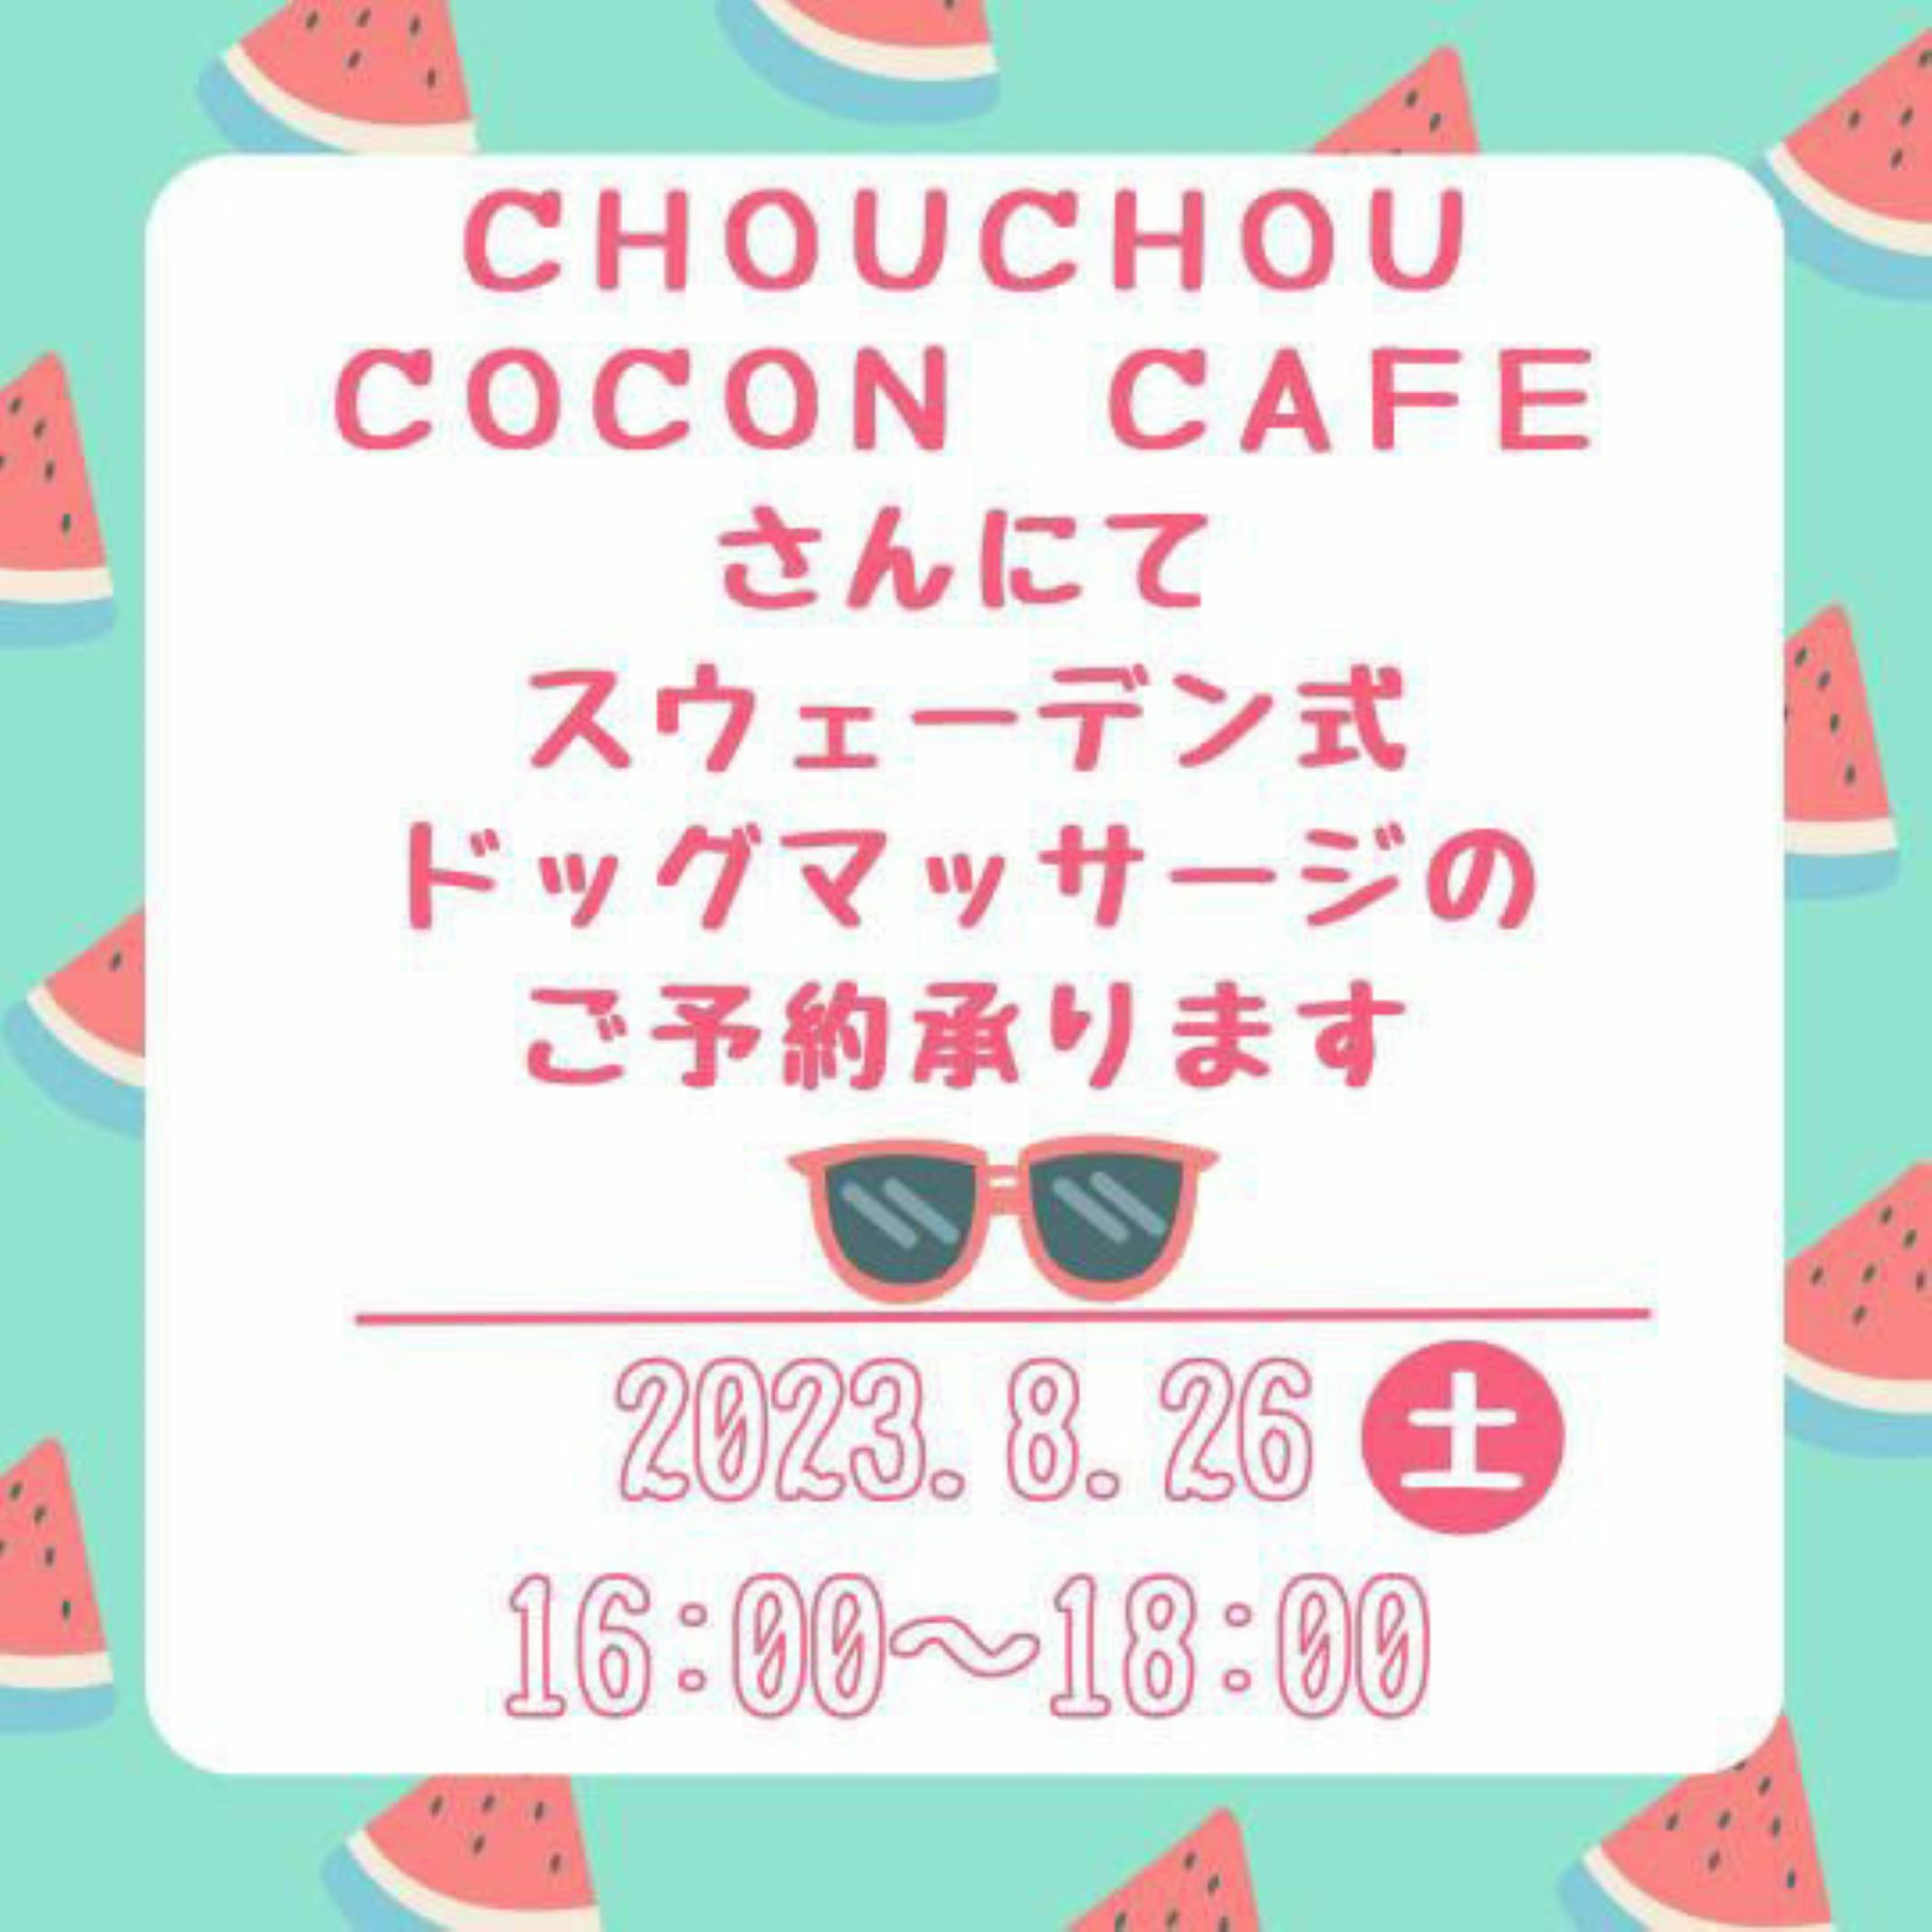 資料提供：chou chou cocon cafe・MOANA